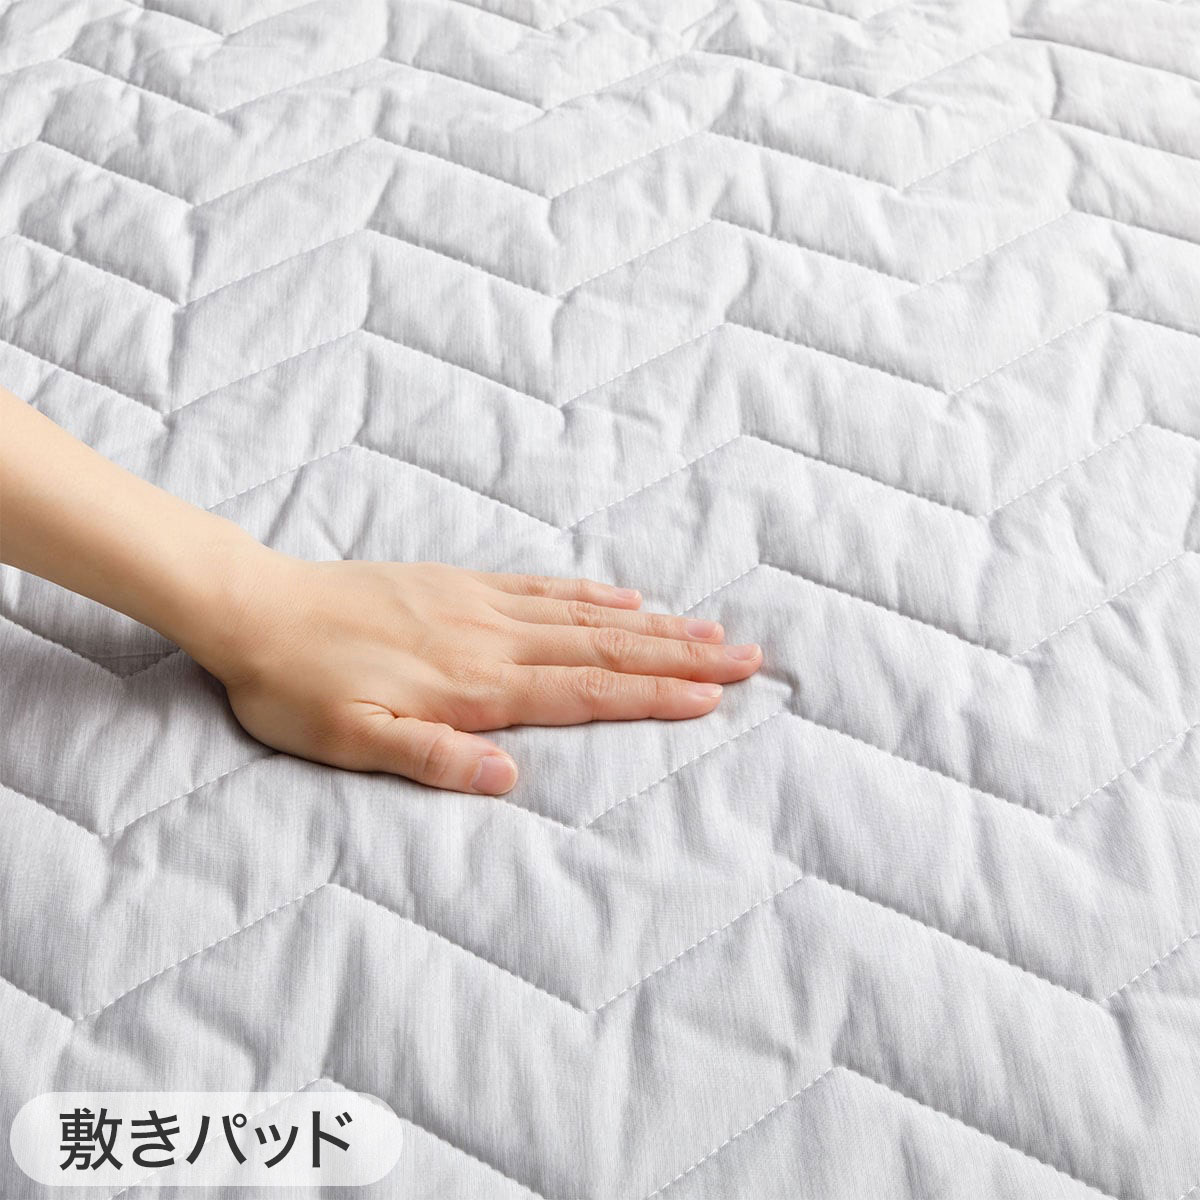  body futon * mattress pad * pillow pad N cool WSP bedding 3 point set single gray (GY S2403)nitoli